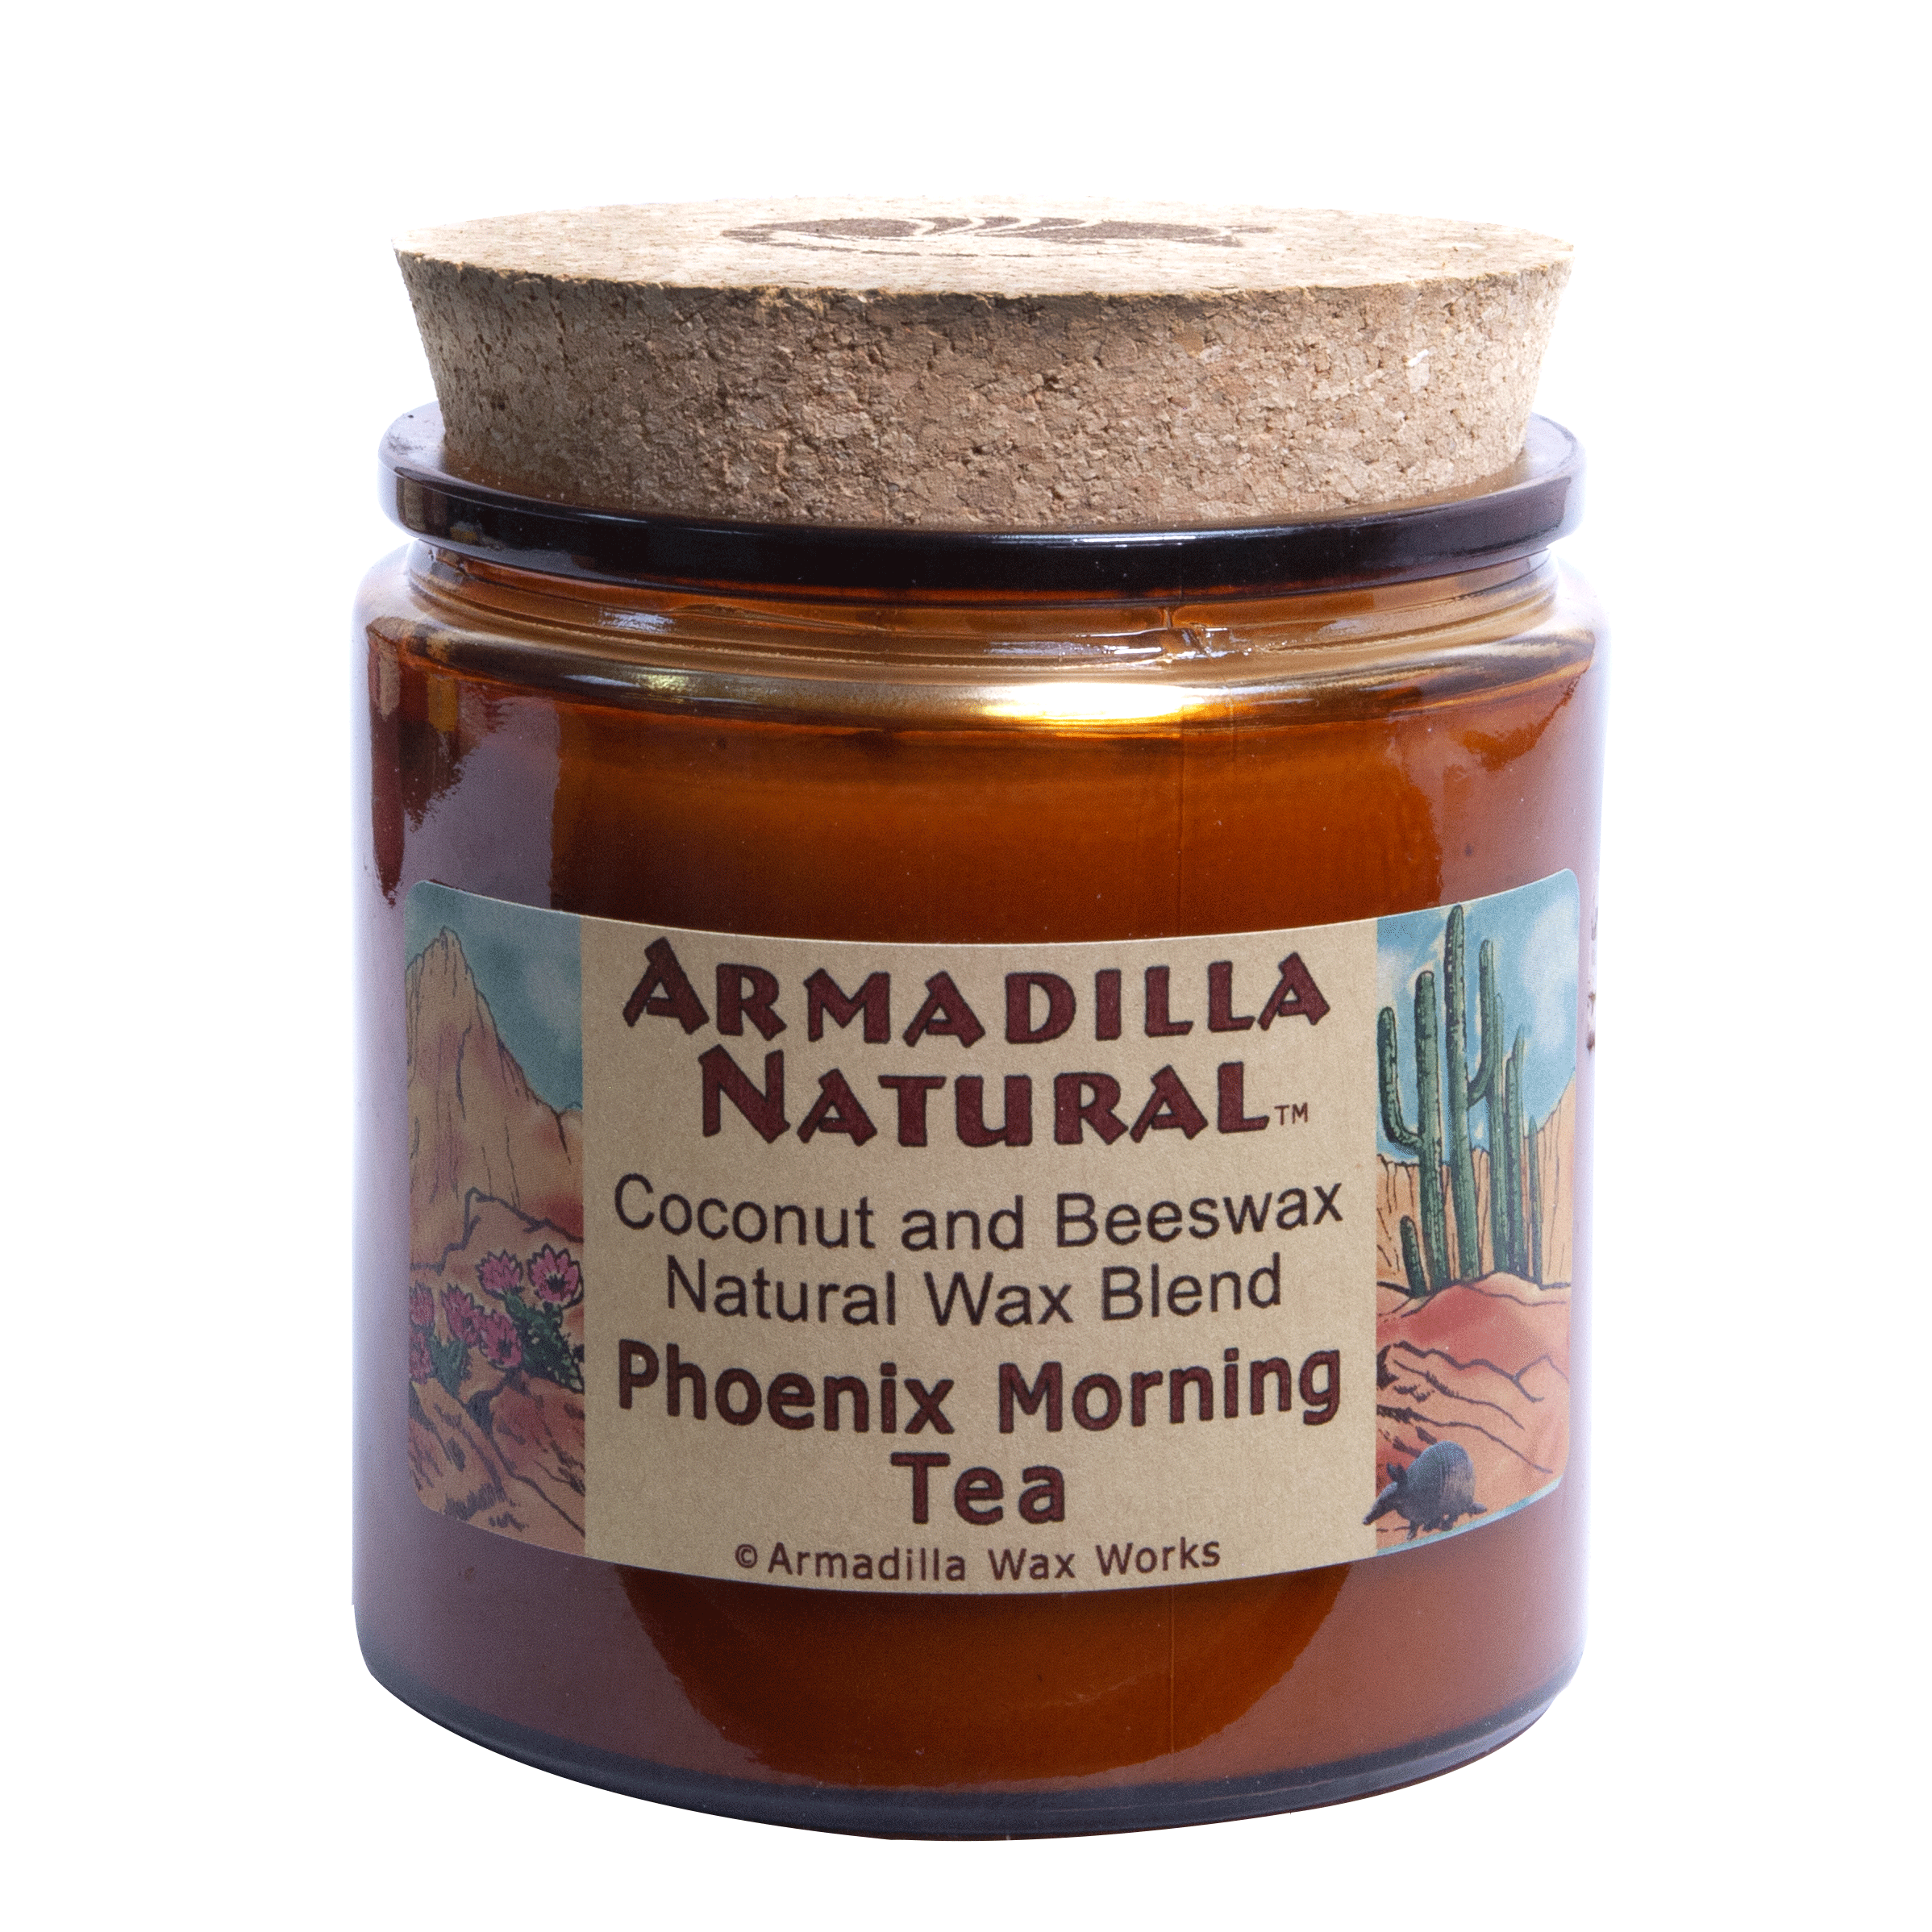 Phoenix Morning Tea Coconut Beeswax - Armadilla Wax Works Candle Factory Store